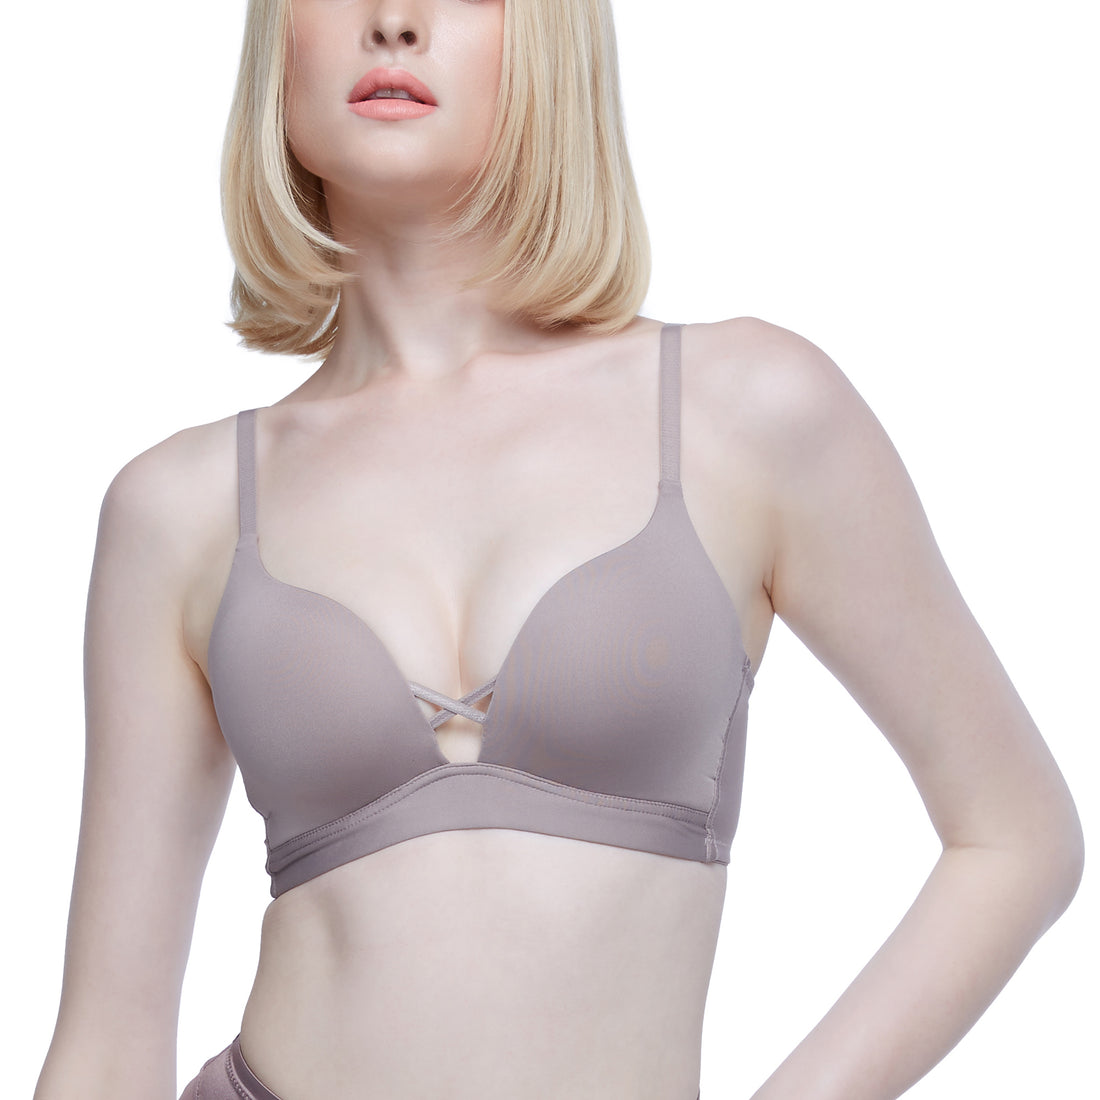 Wacoal Wireless Bra, wireless bra, comfortable to wear, thin padding 1 –  Thai Wacoal Public Company Limited